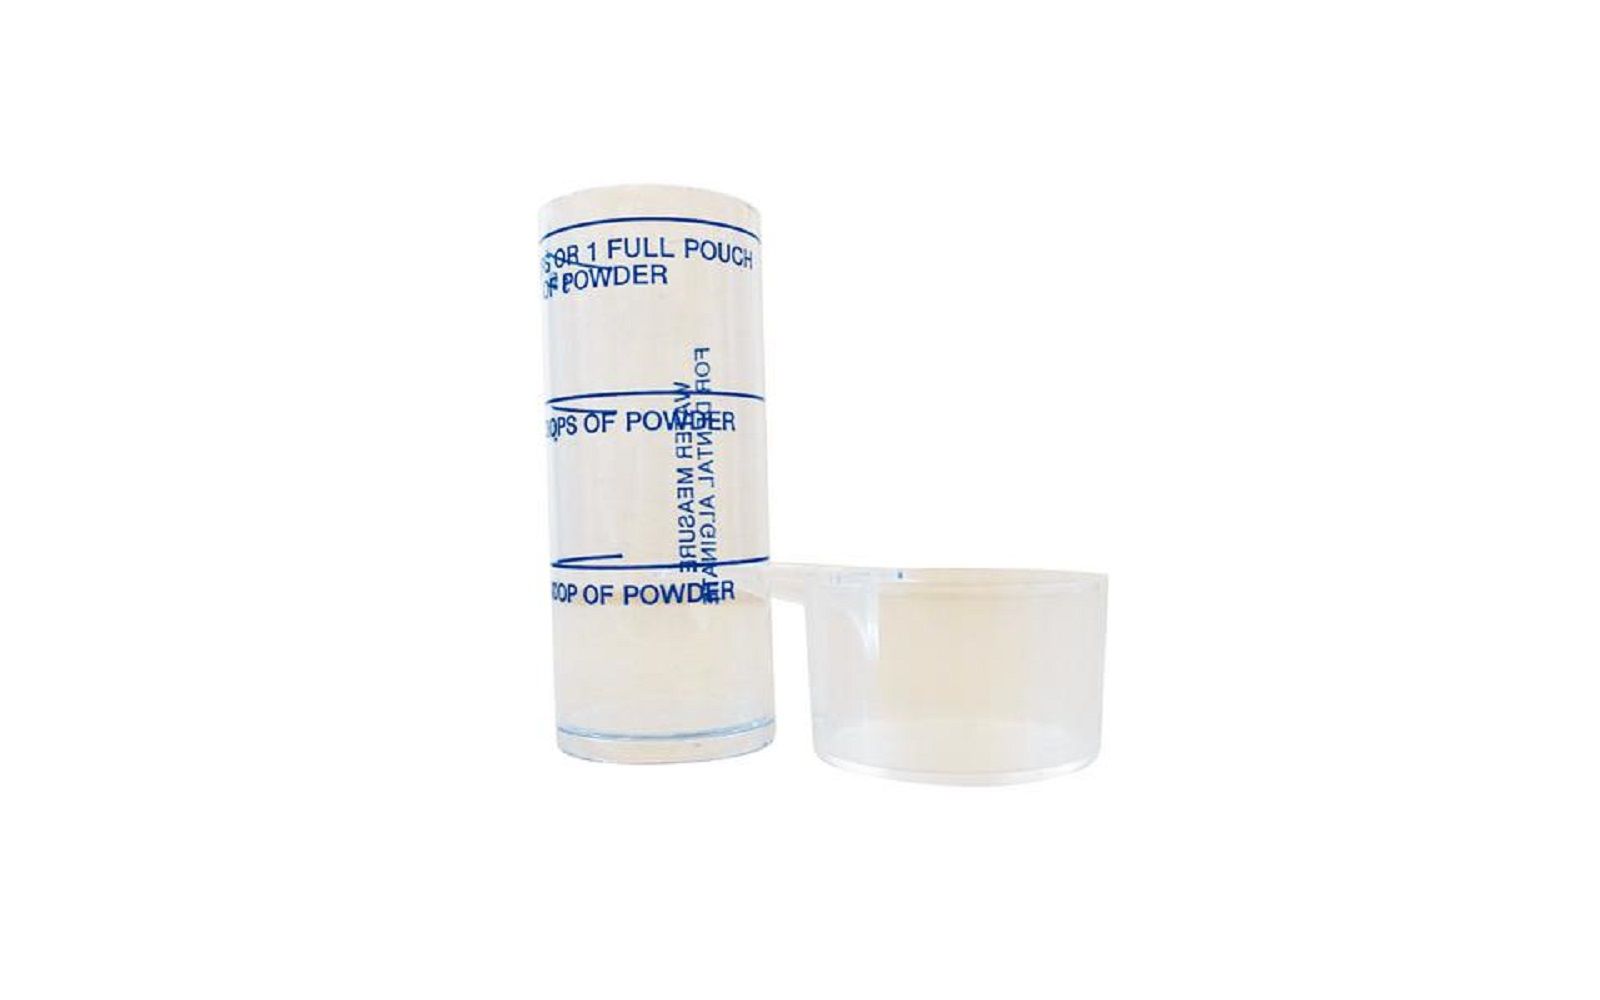 Patterson® algitec powder/water measuring set